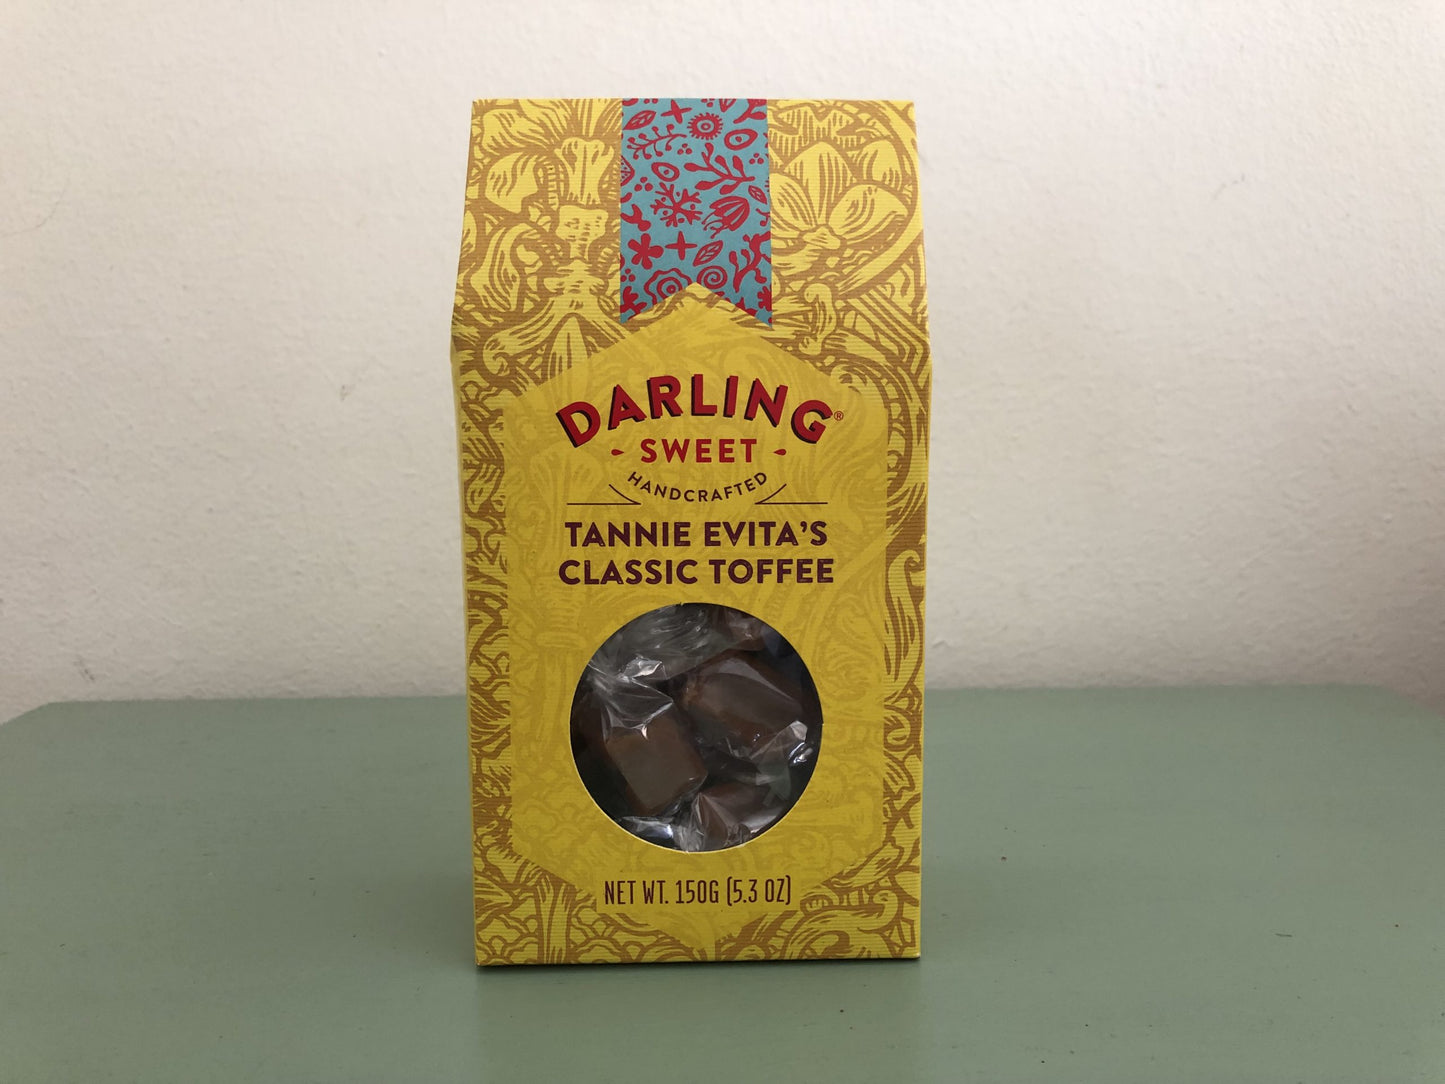 Darling Sweet - Tannie Evita's Classic Toffee